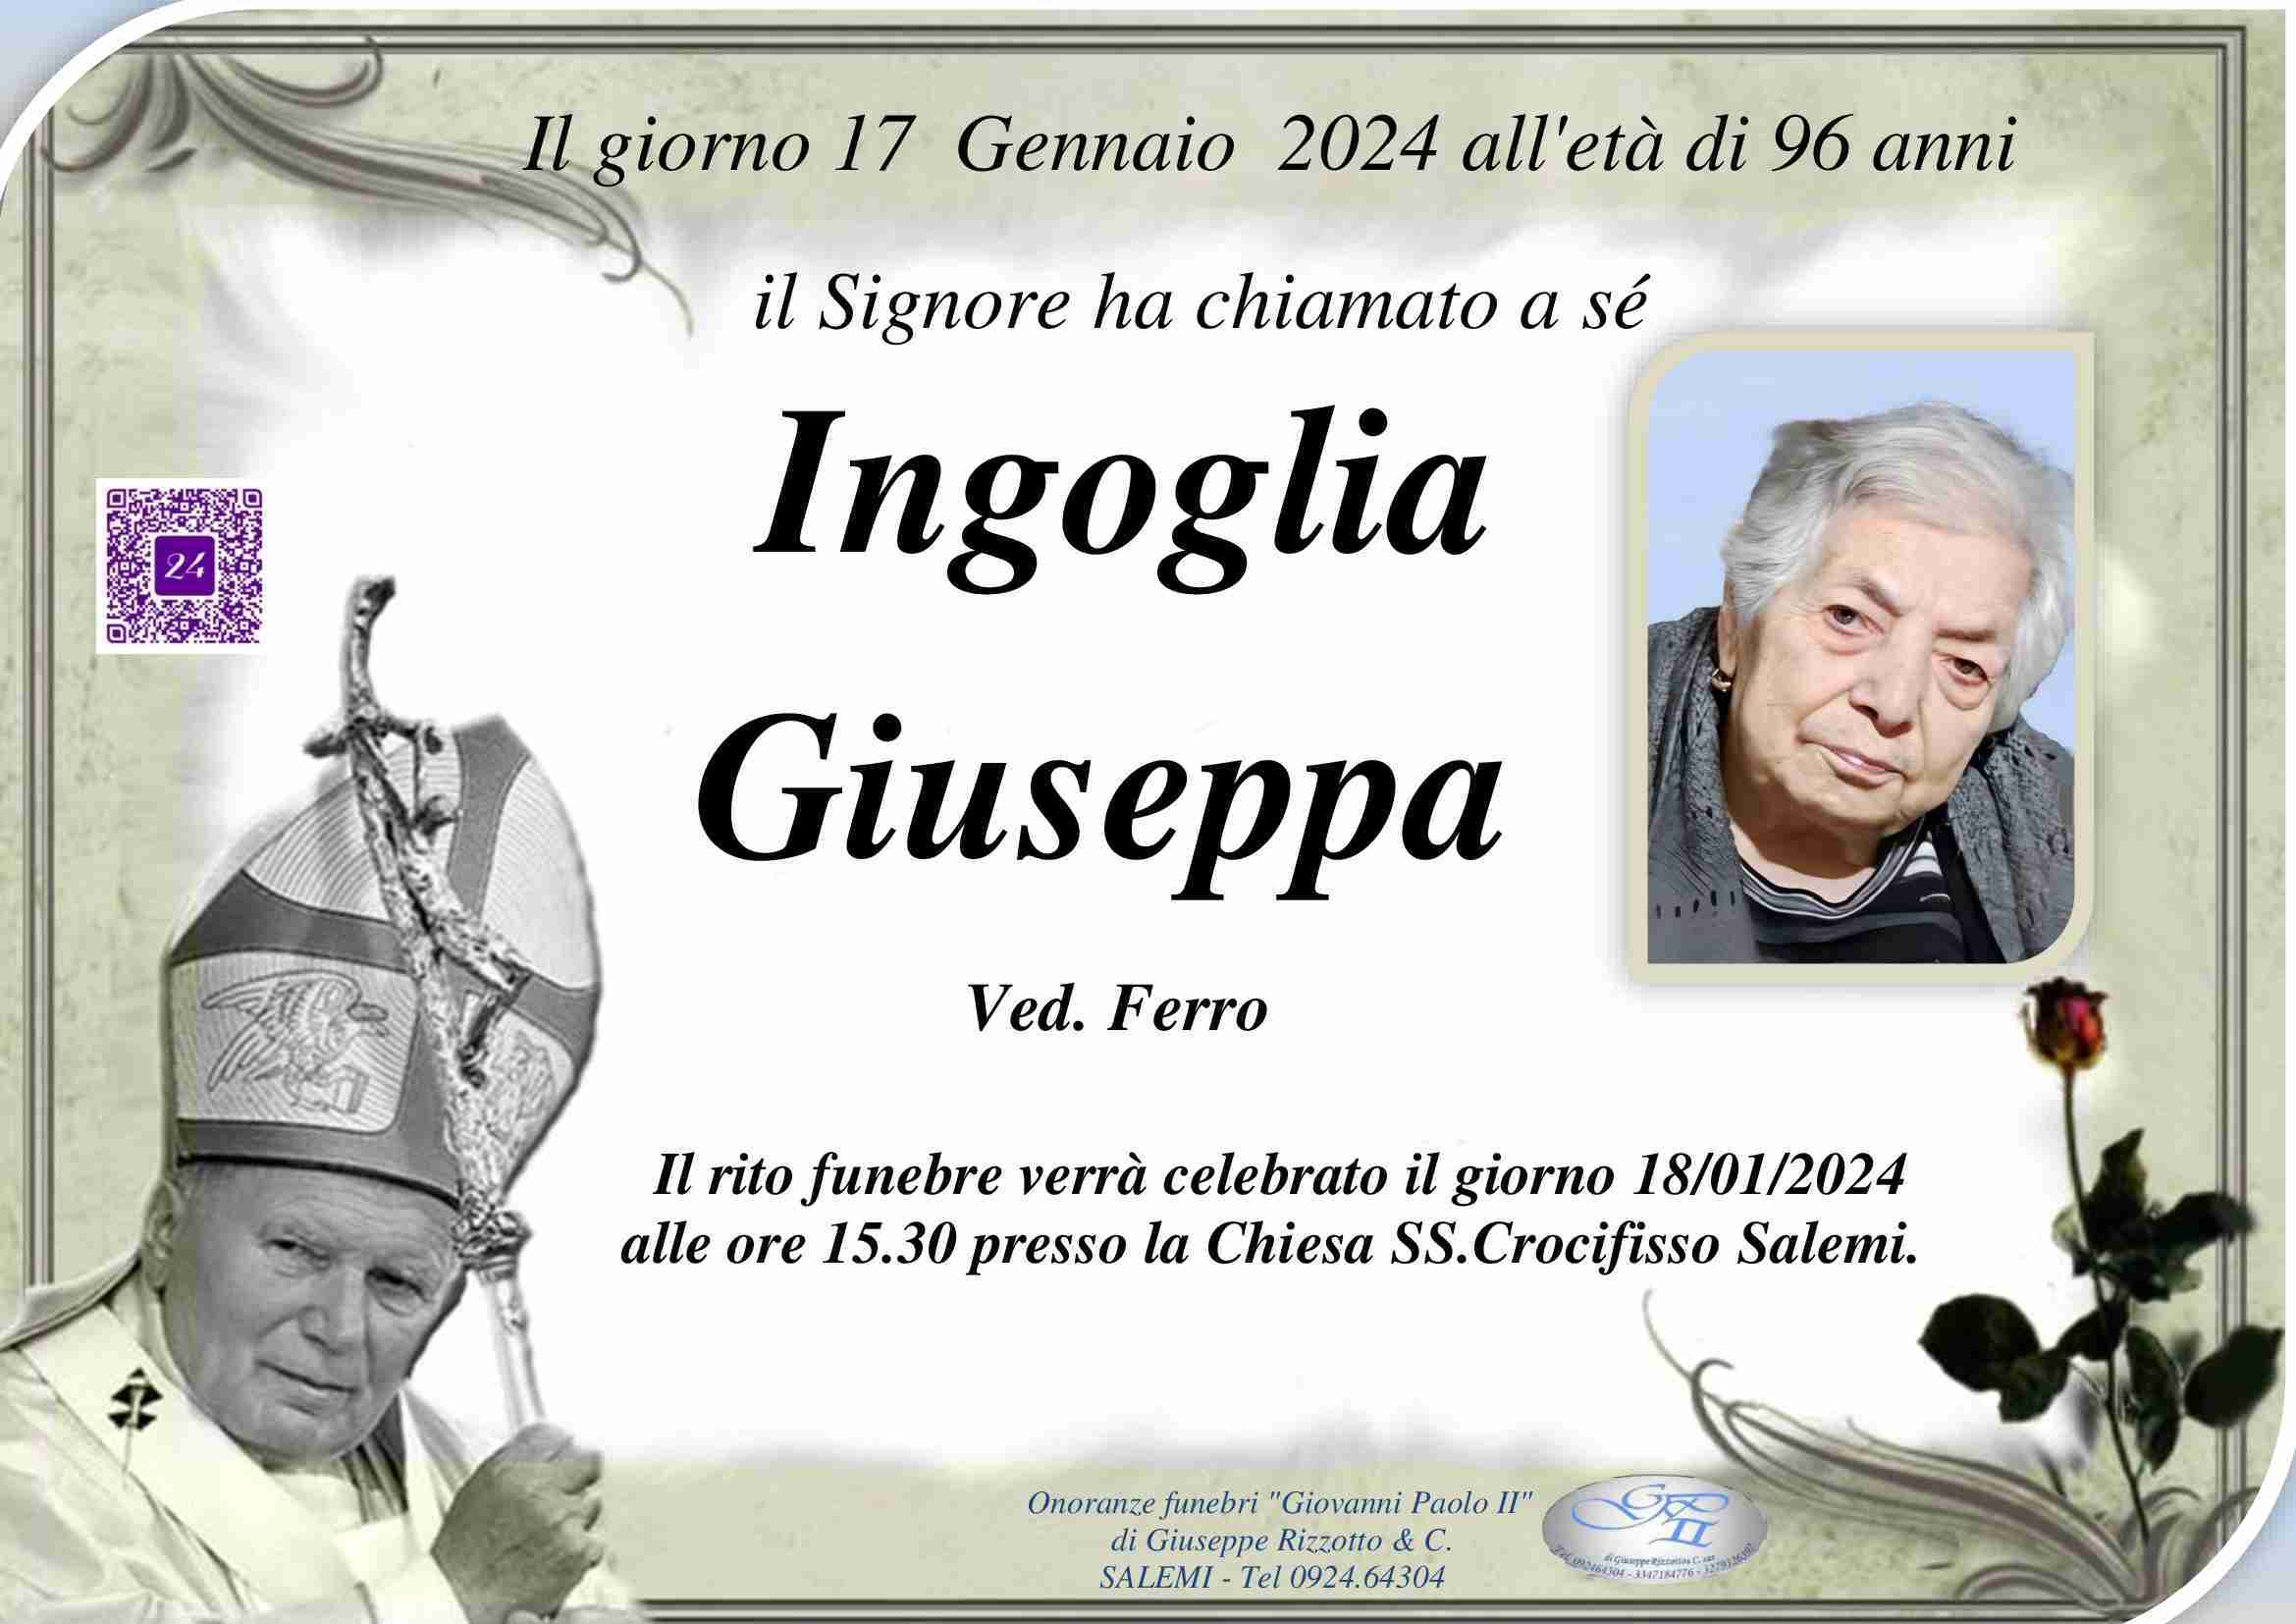 Giuseppa Ingoglia